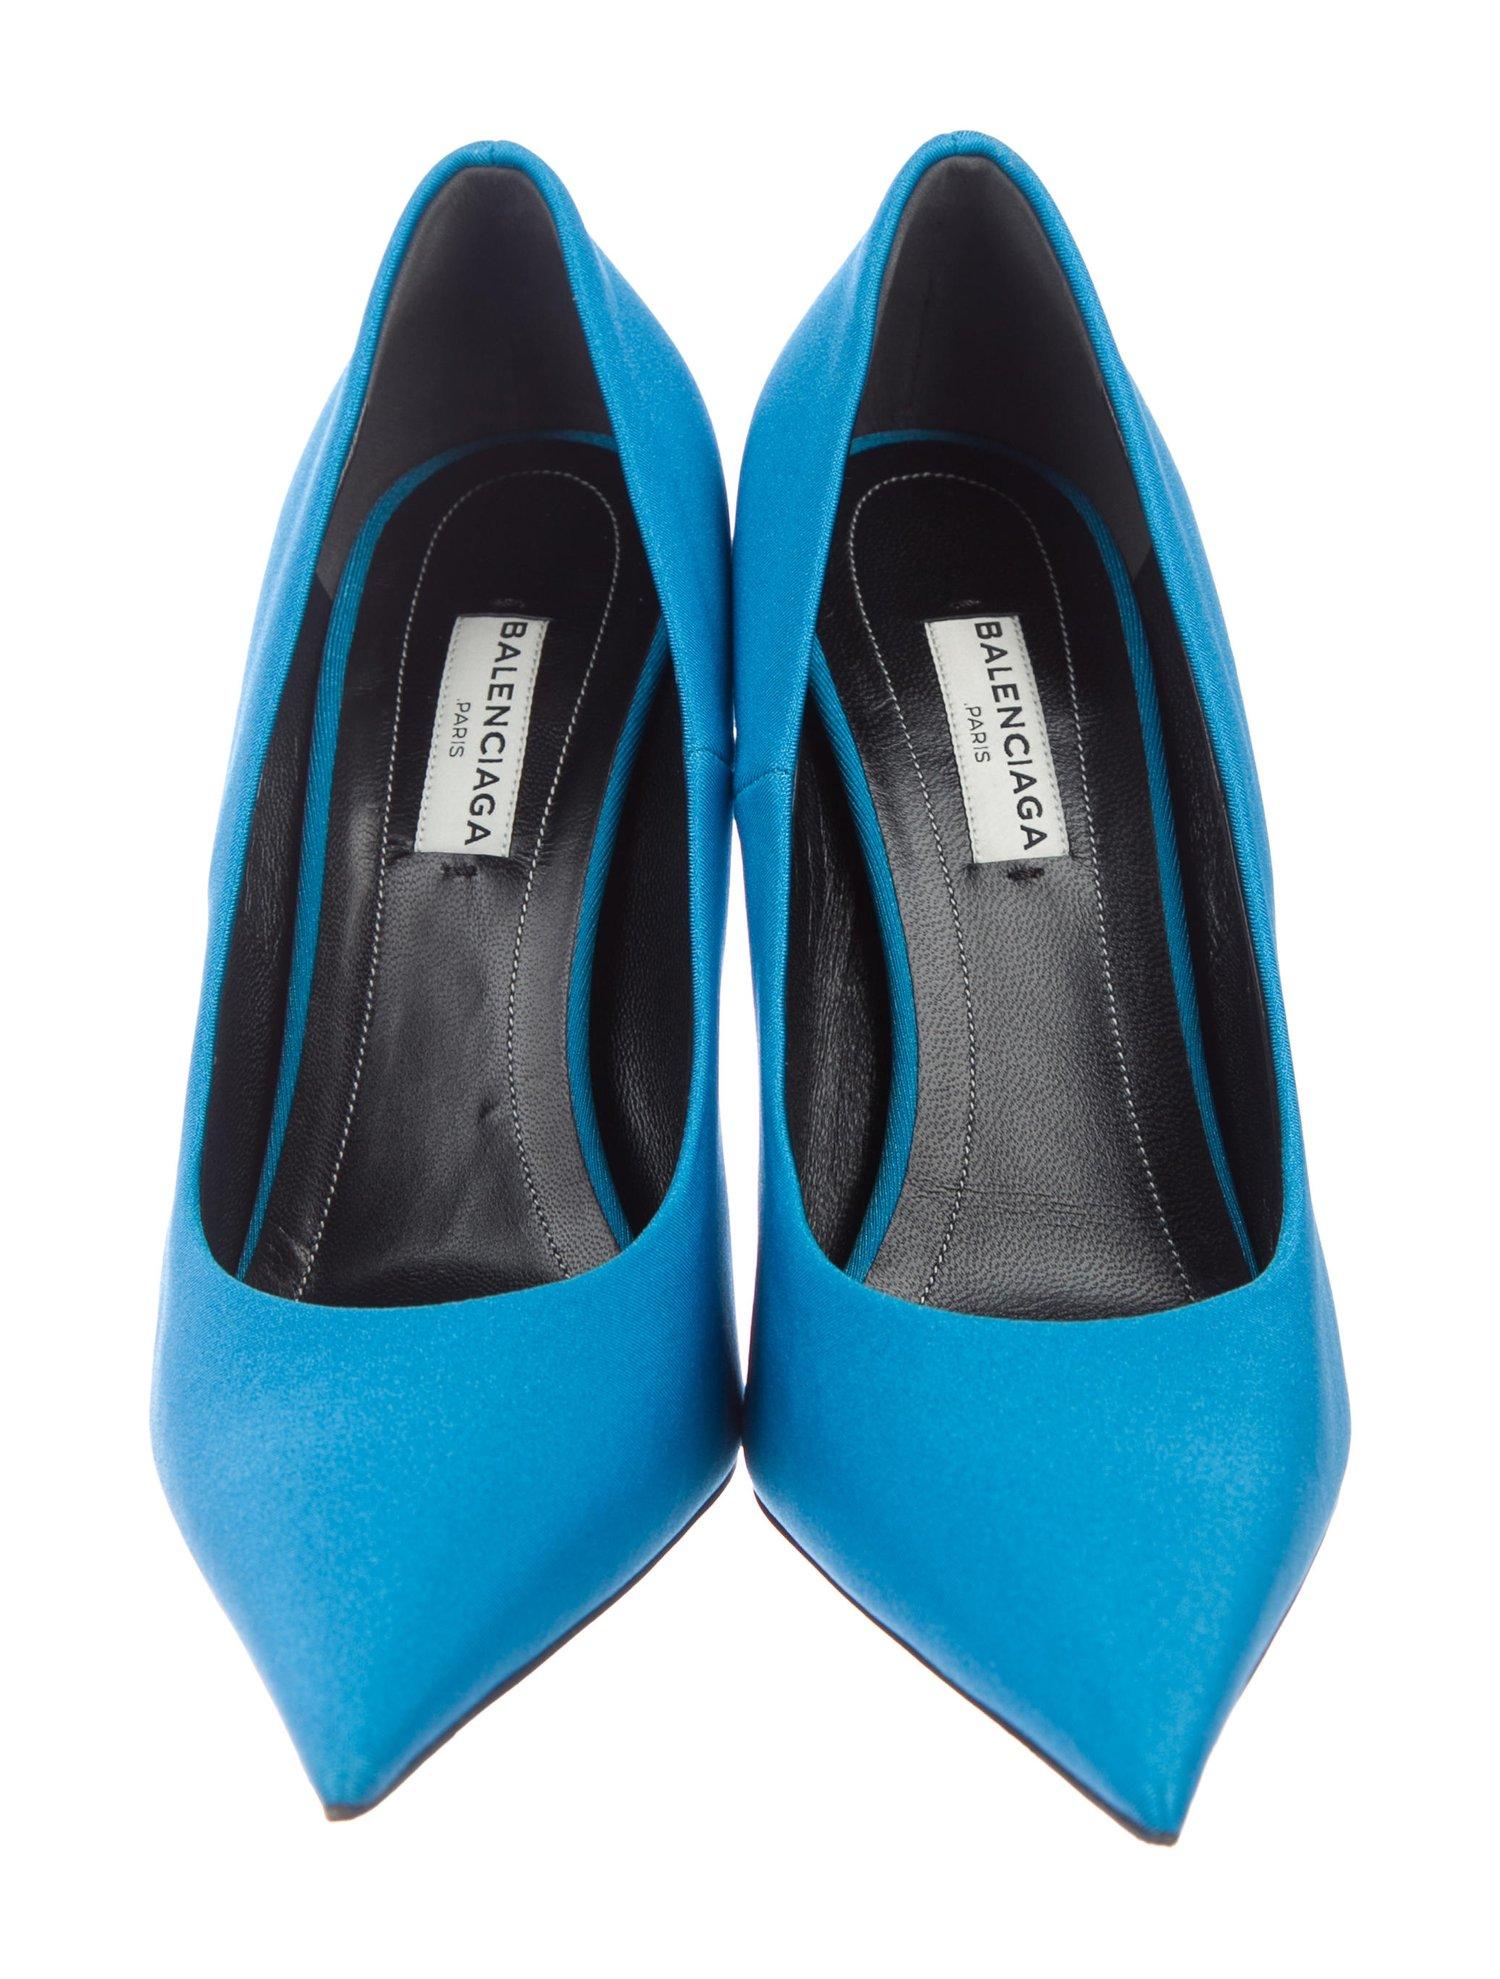 Balenciaga NEW Blue Satin Fabric Sock Evening Heels Pumps in Box

Size IT 36.5
Satin/Fabric
Slip on 
Made in Italy
Heel height 4